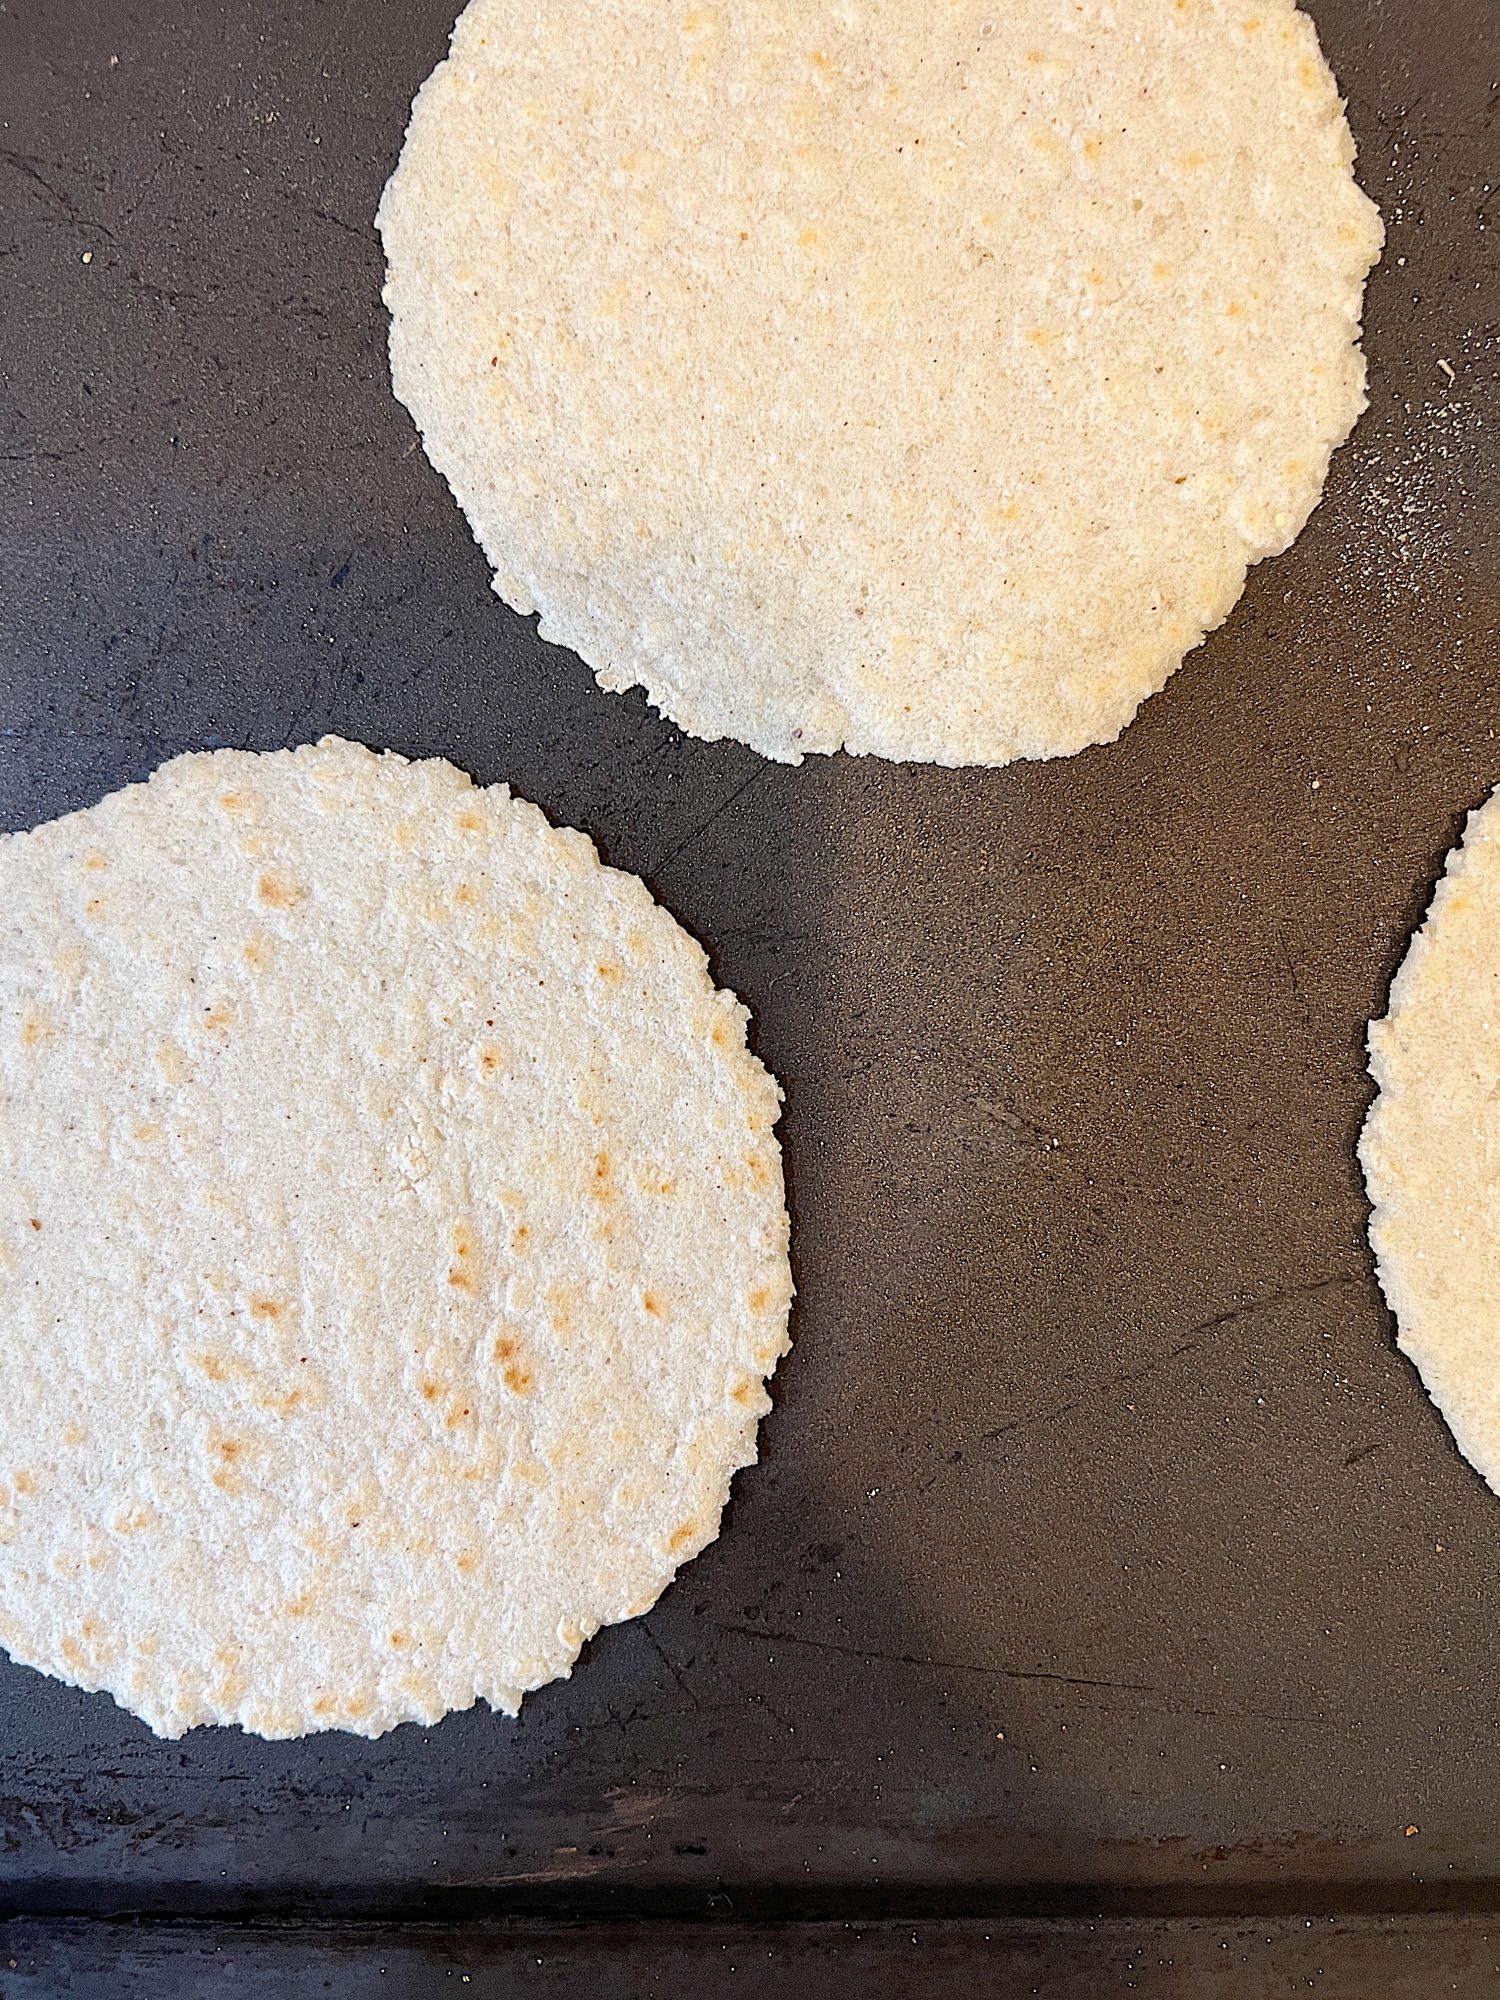 How to Make White Corn Tortillas